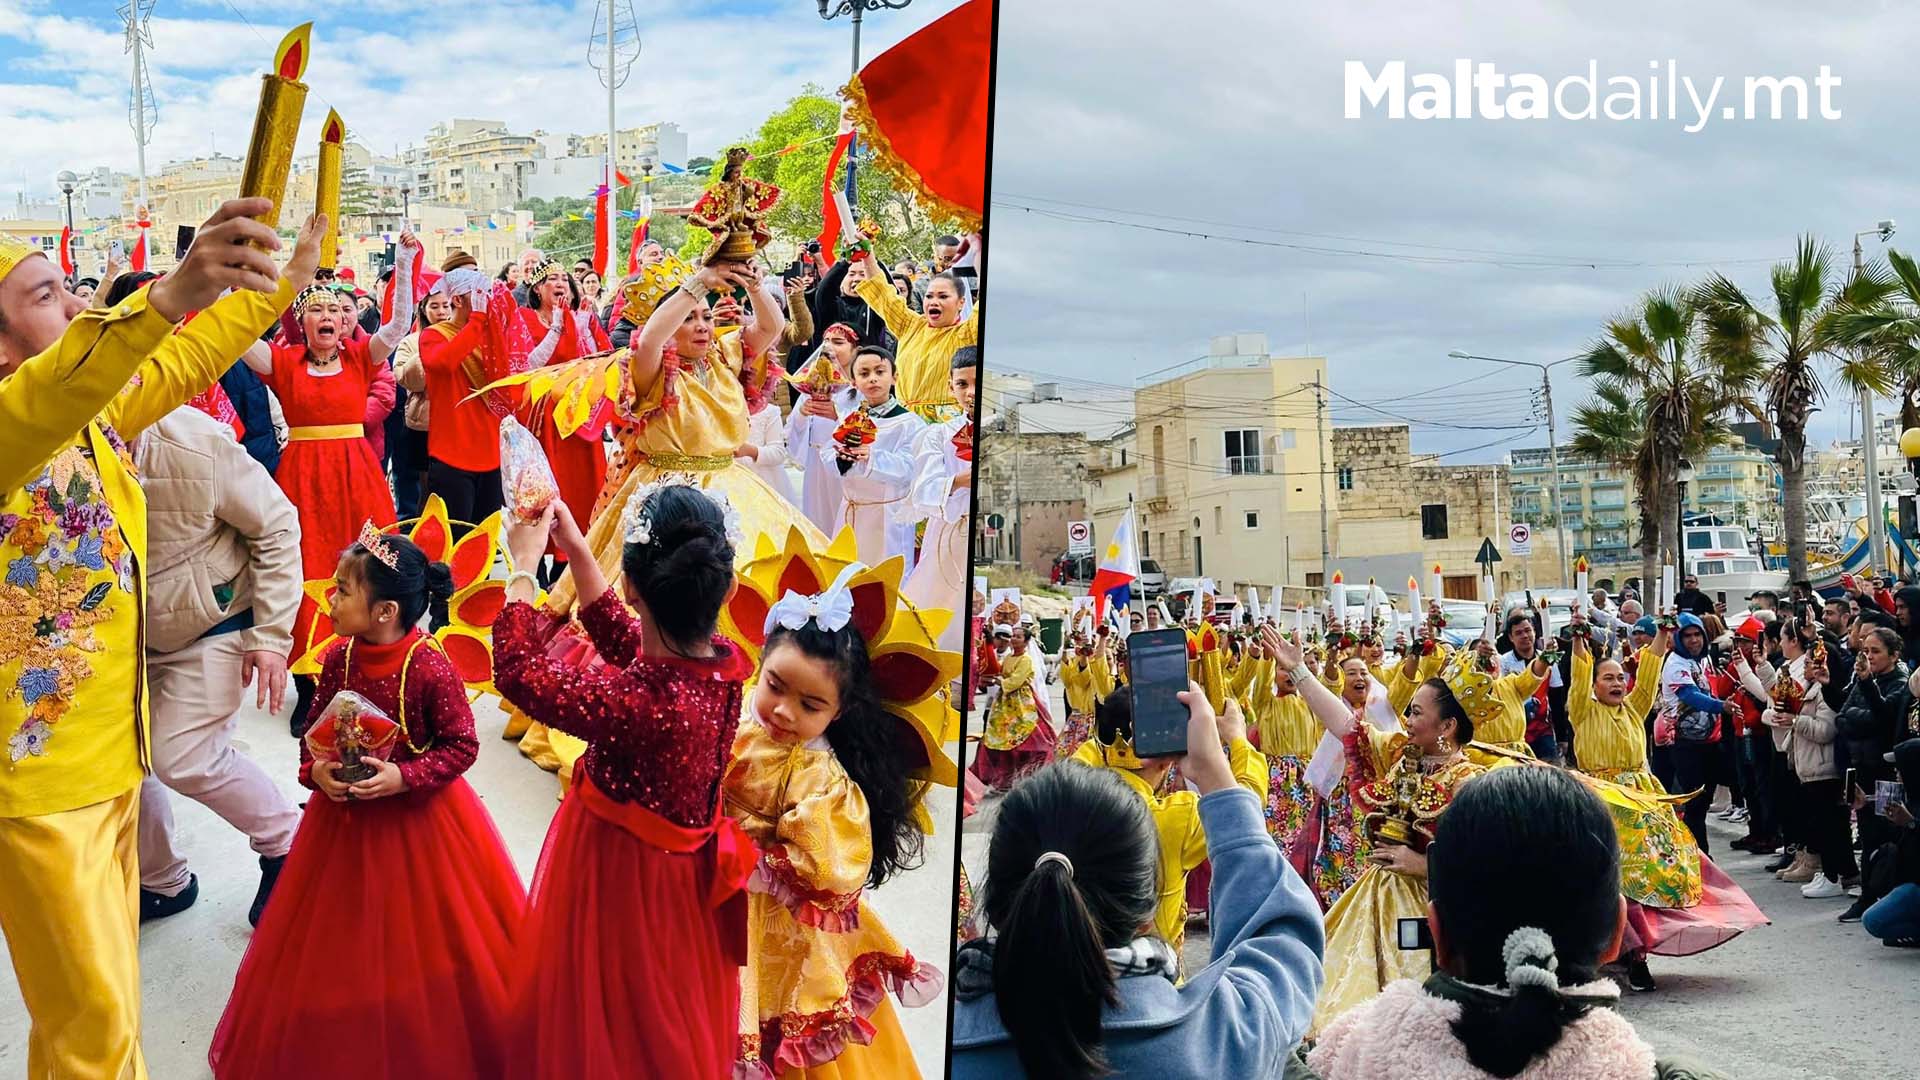 Local Filipino Community Celebrates Santo Nino In Marsascala